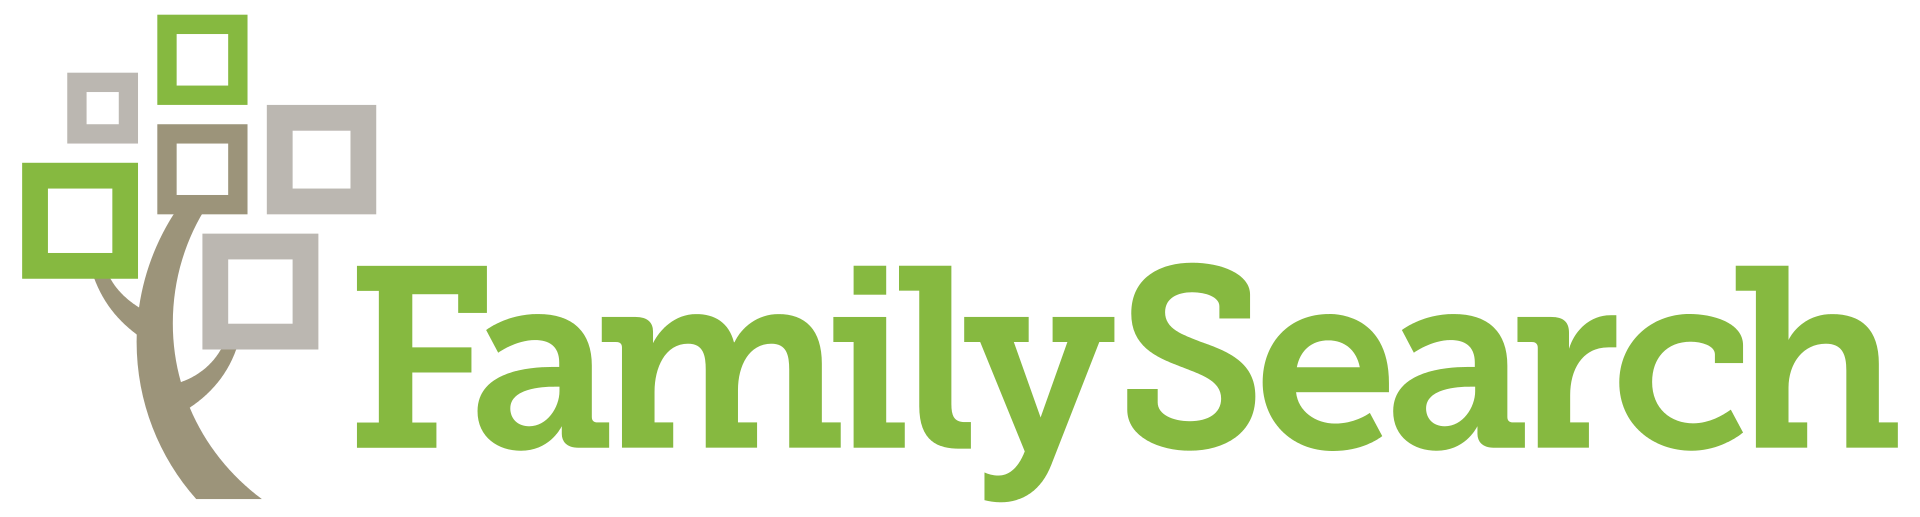 FamilySearch_2013_logo.svg